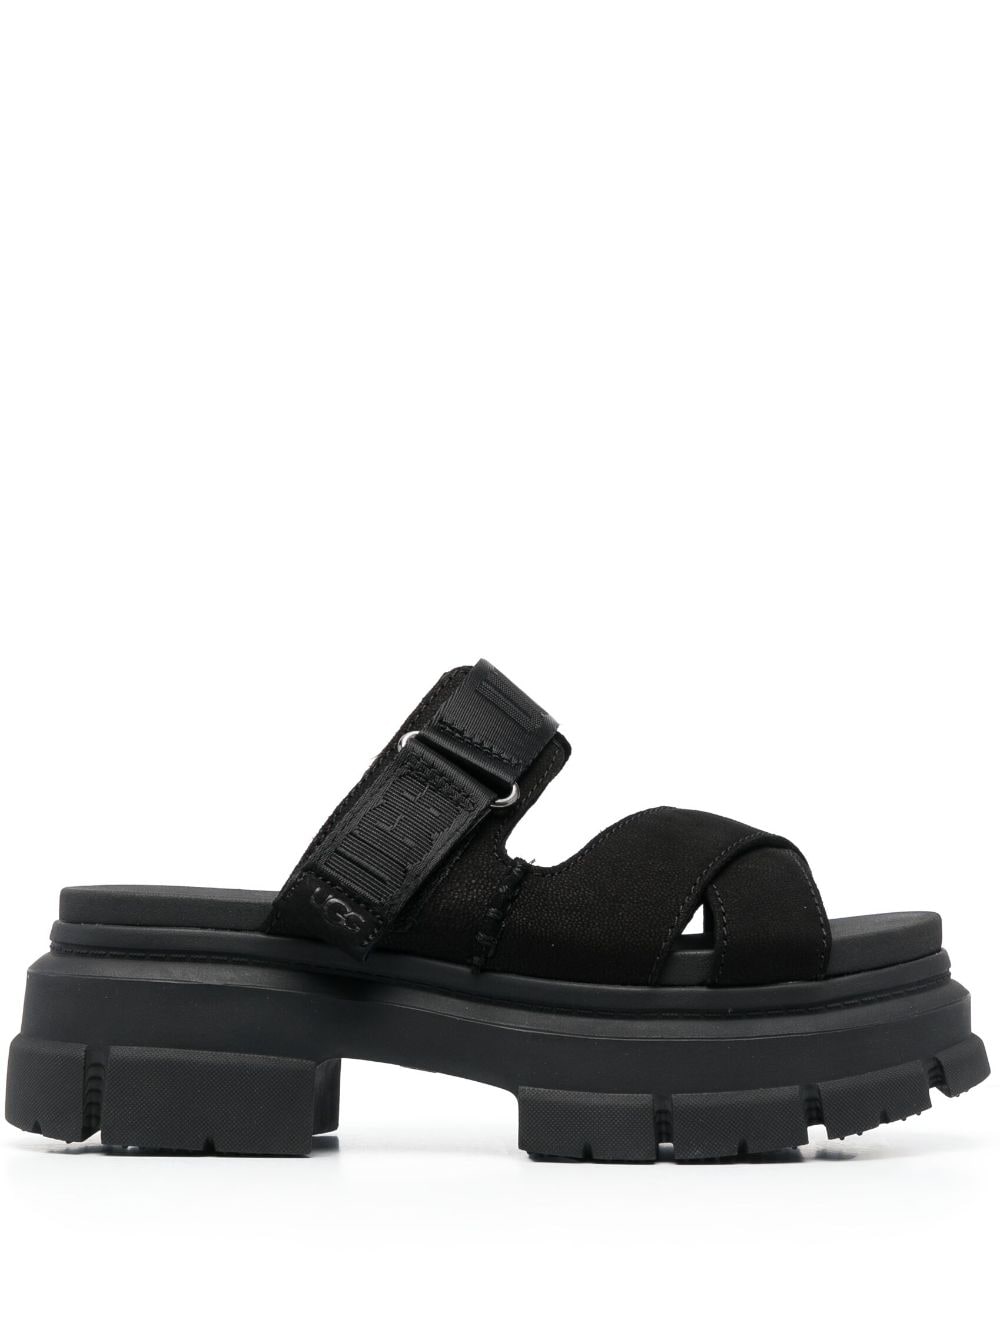 Image 1 of UGG Ashton slide sandals